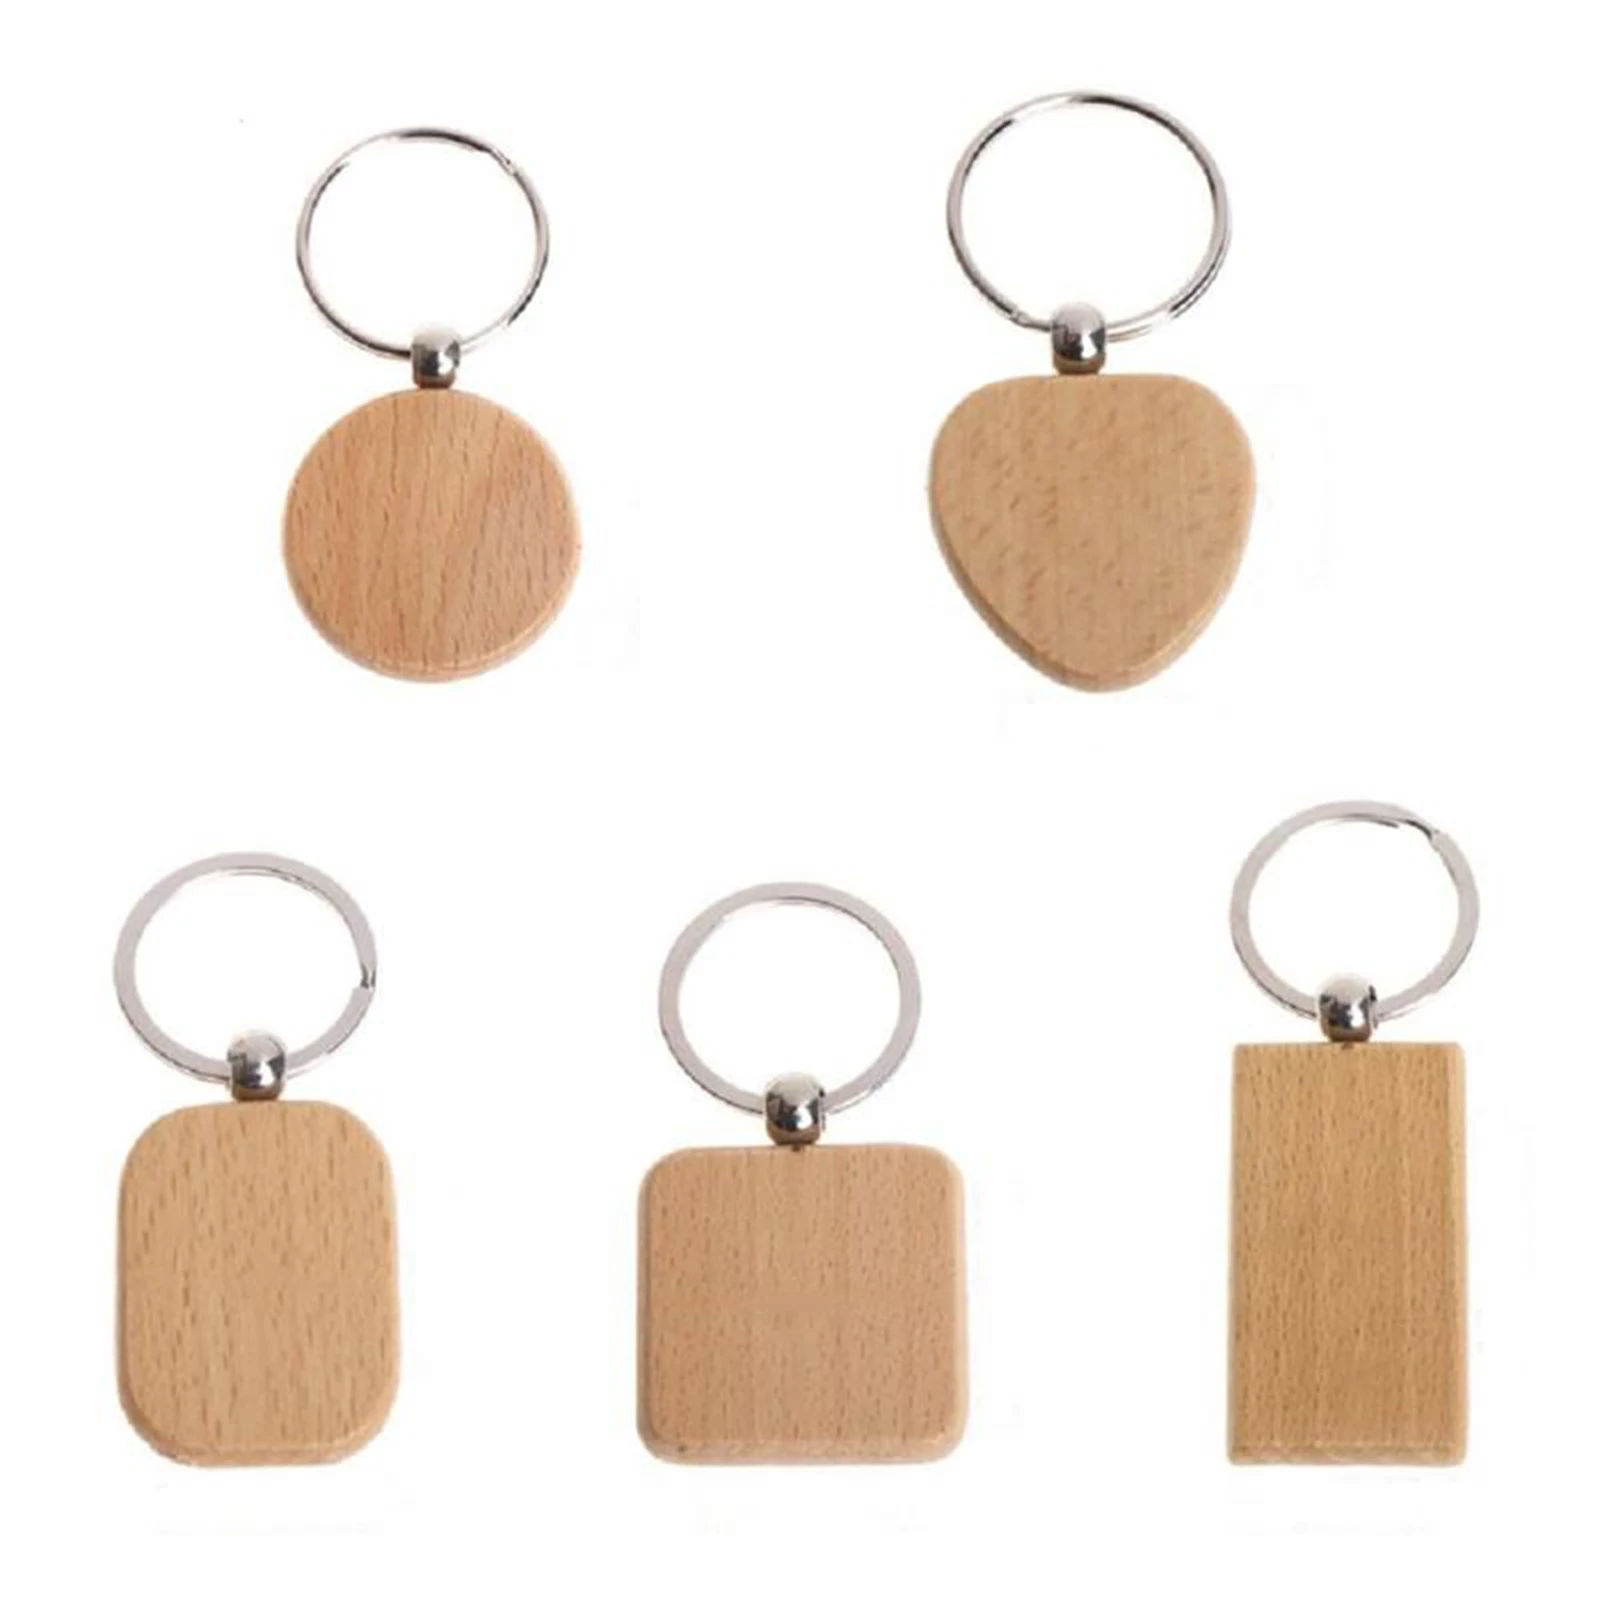 25x Unfinished Blank Plain Wooden Key Chain Wood Keychain Charm Pendant